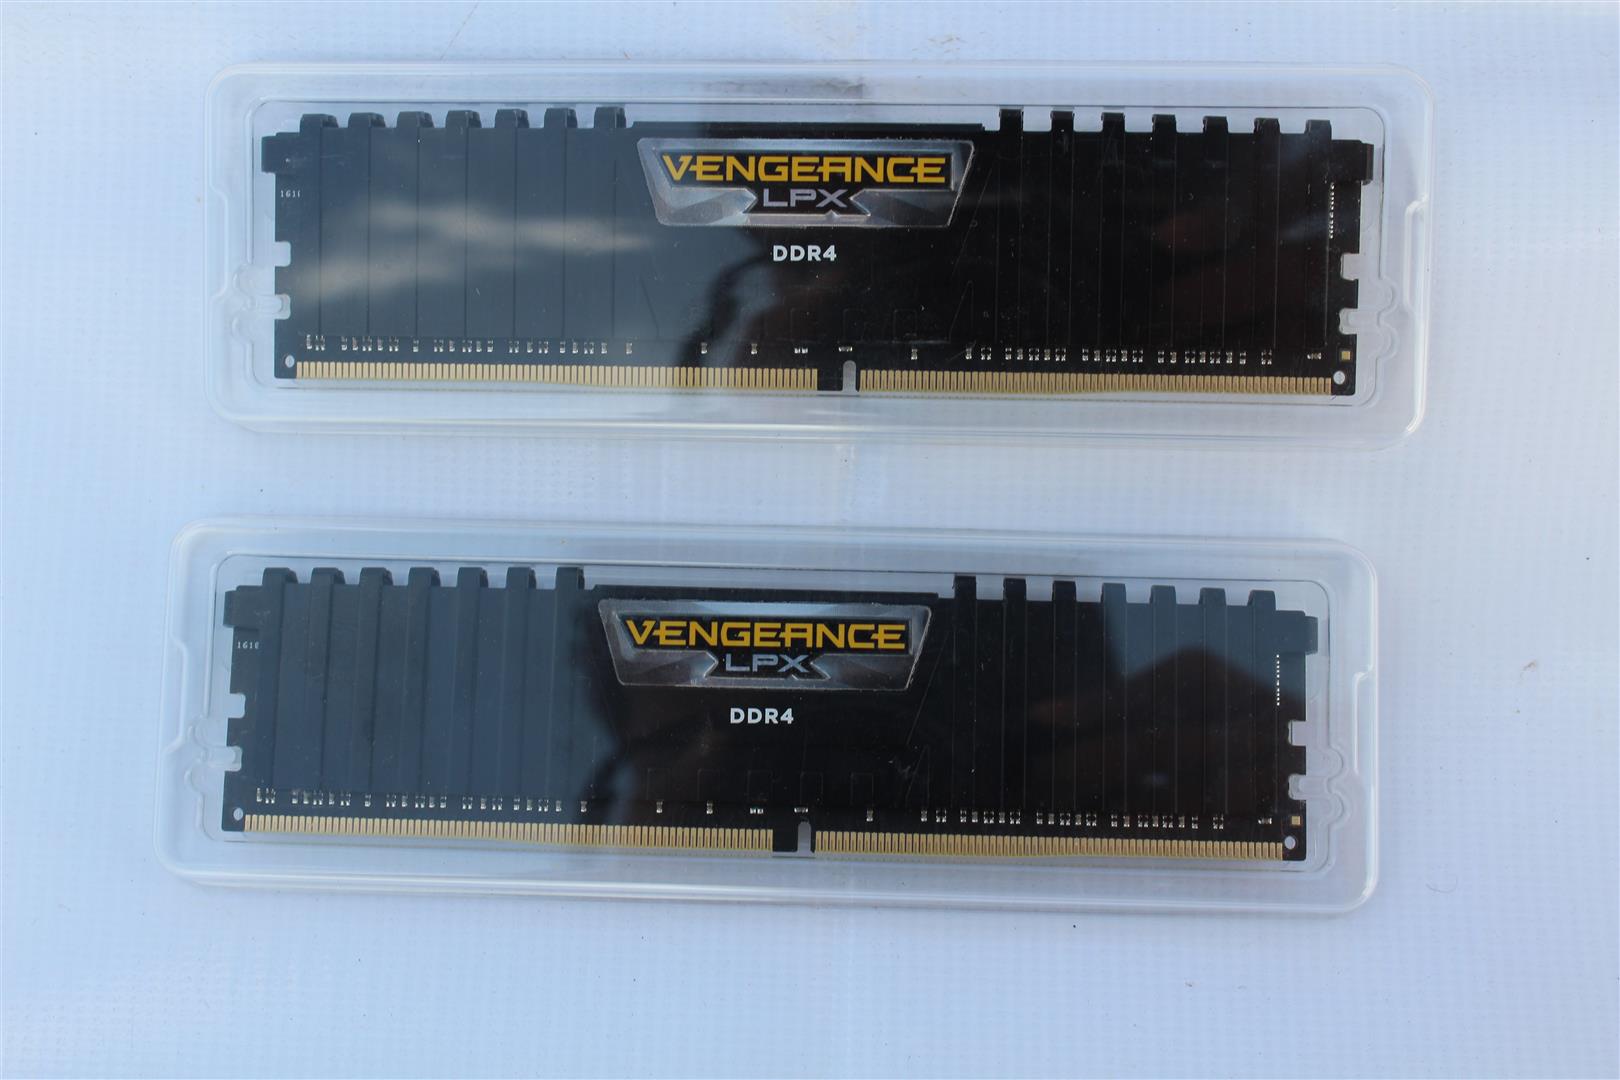 Corsair VENGEANCE LPX DDR4 RAM 16GB (2x8GB) 3200MHz CL16 Intel XMP 2.0  Computer Memory - Black (CMK16GX4M2E3200C16)